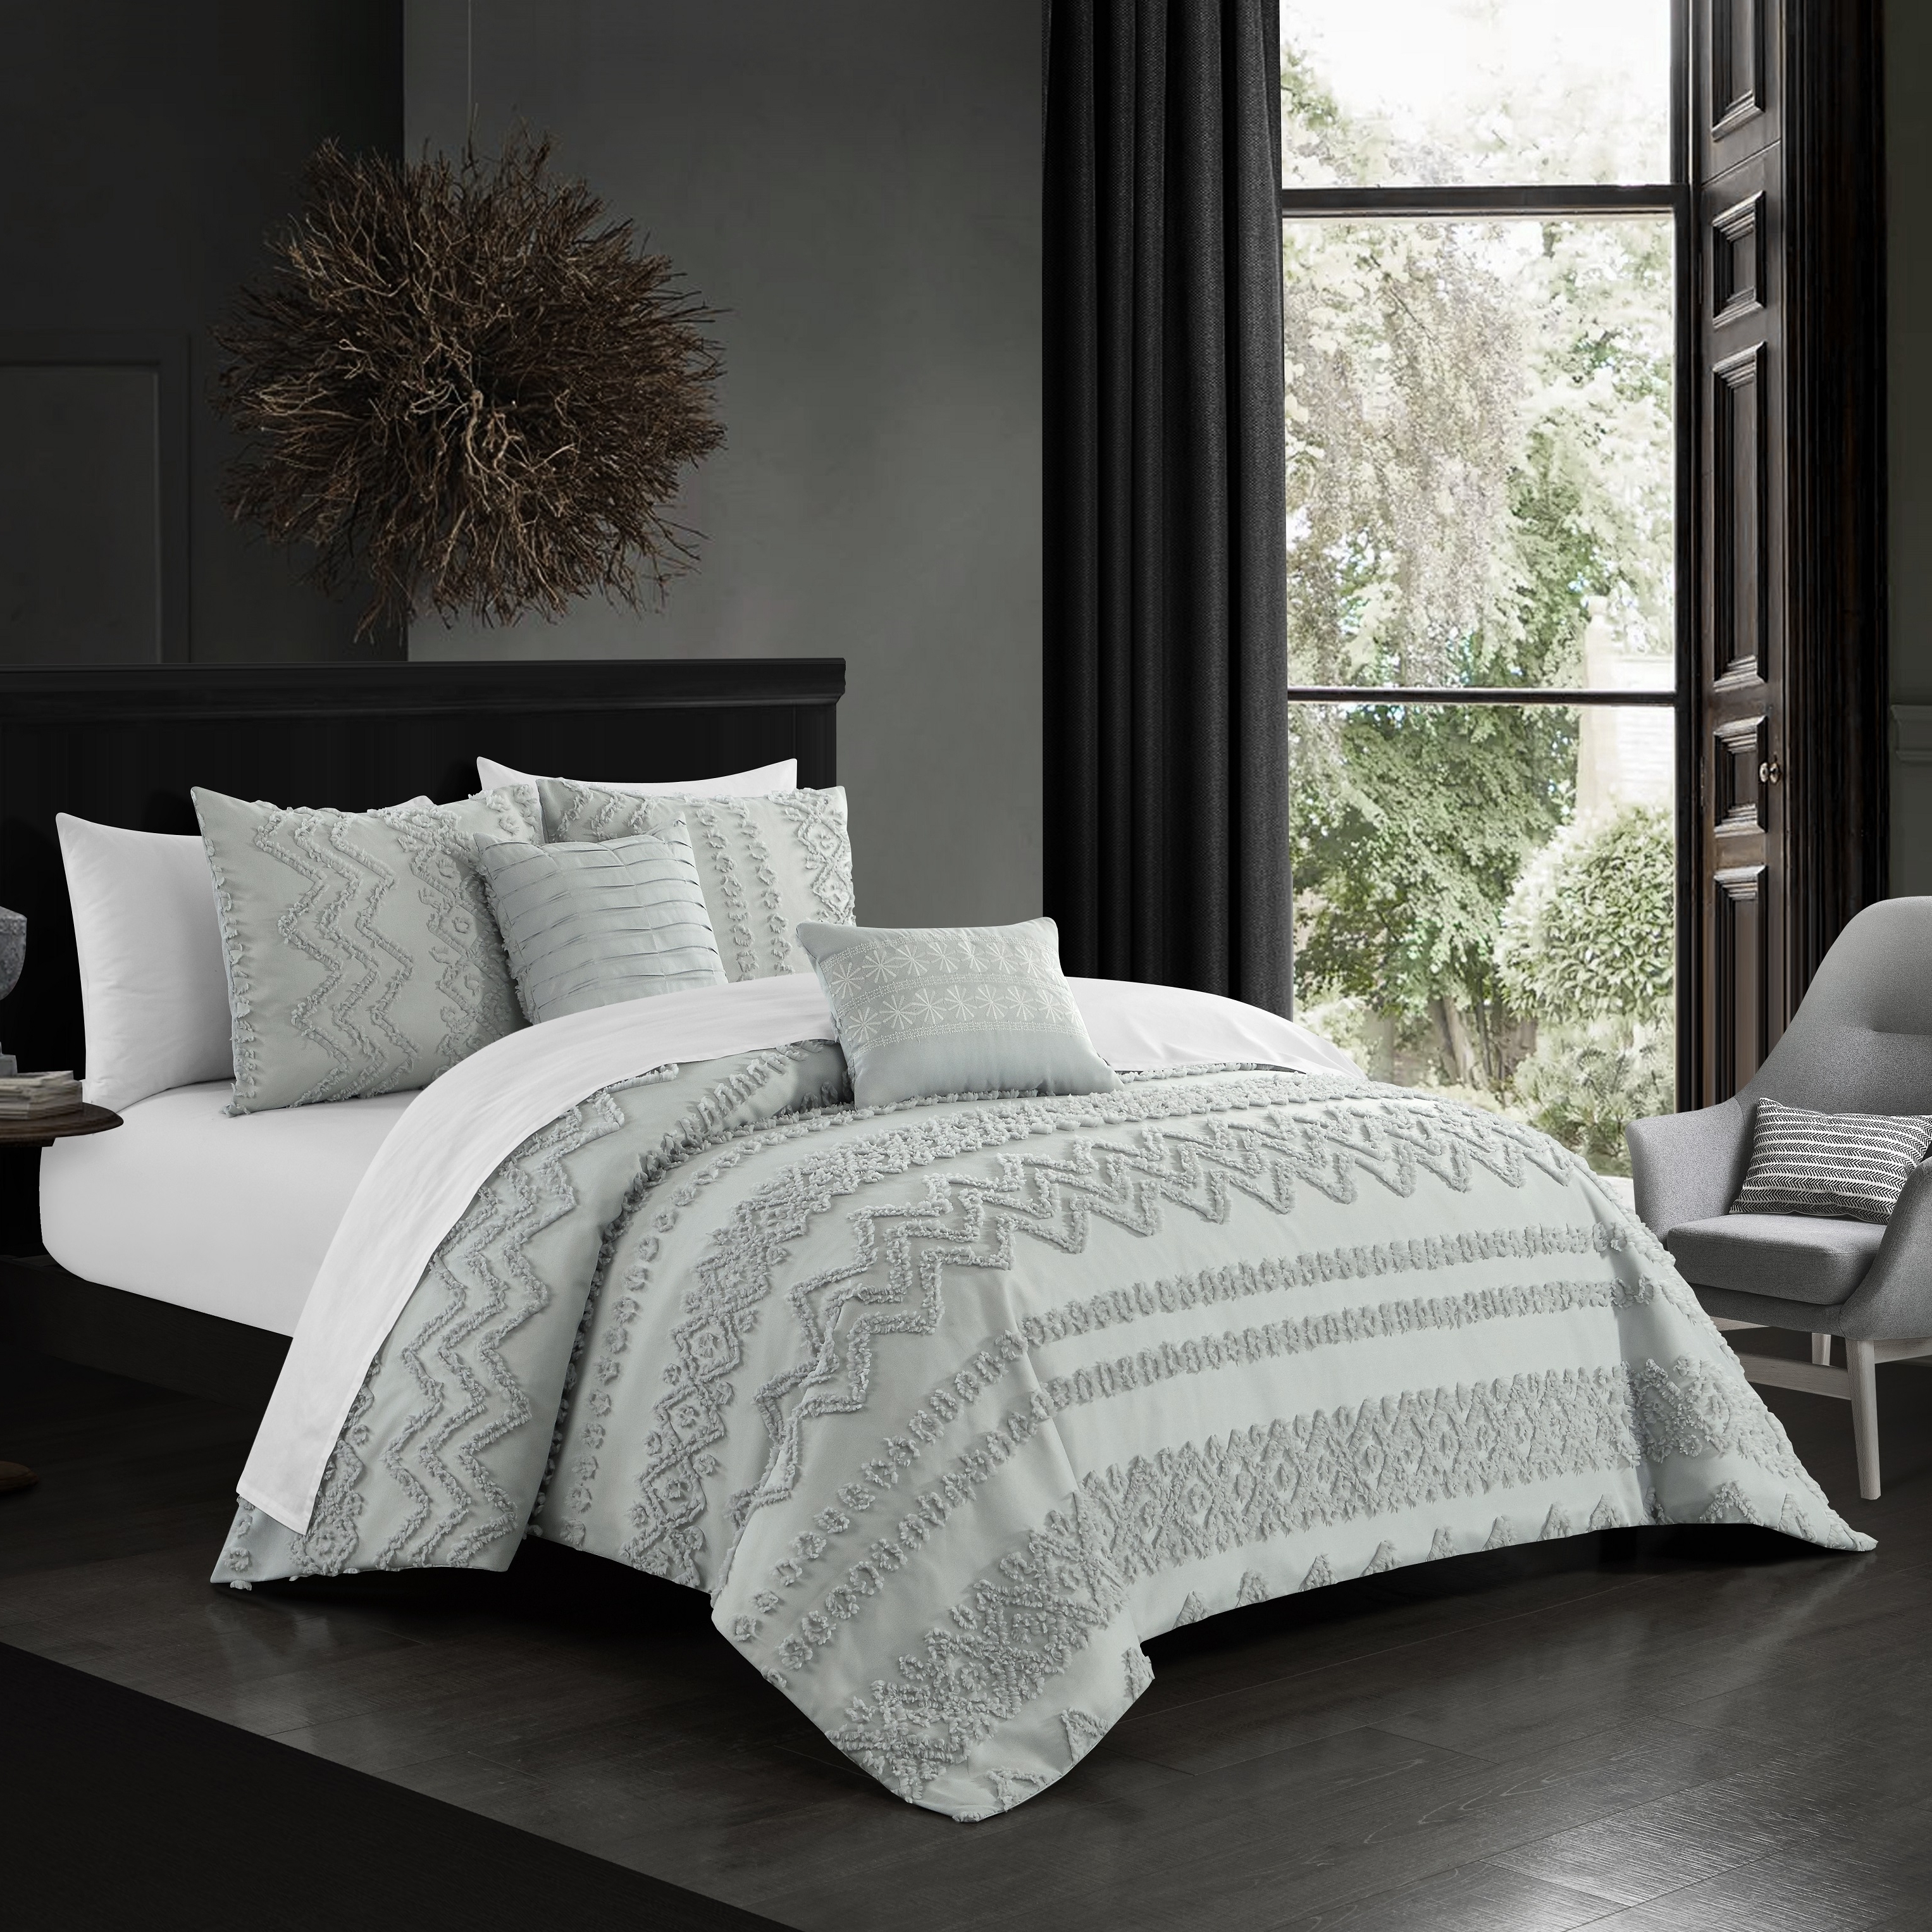 Jenson 5 Piece Comforter Set Jacquard Chevron Geometric Pattern Design Bedding - White, Queen